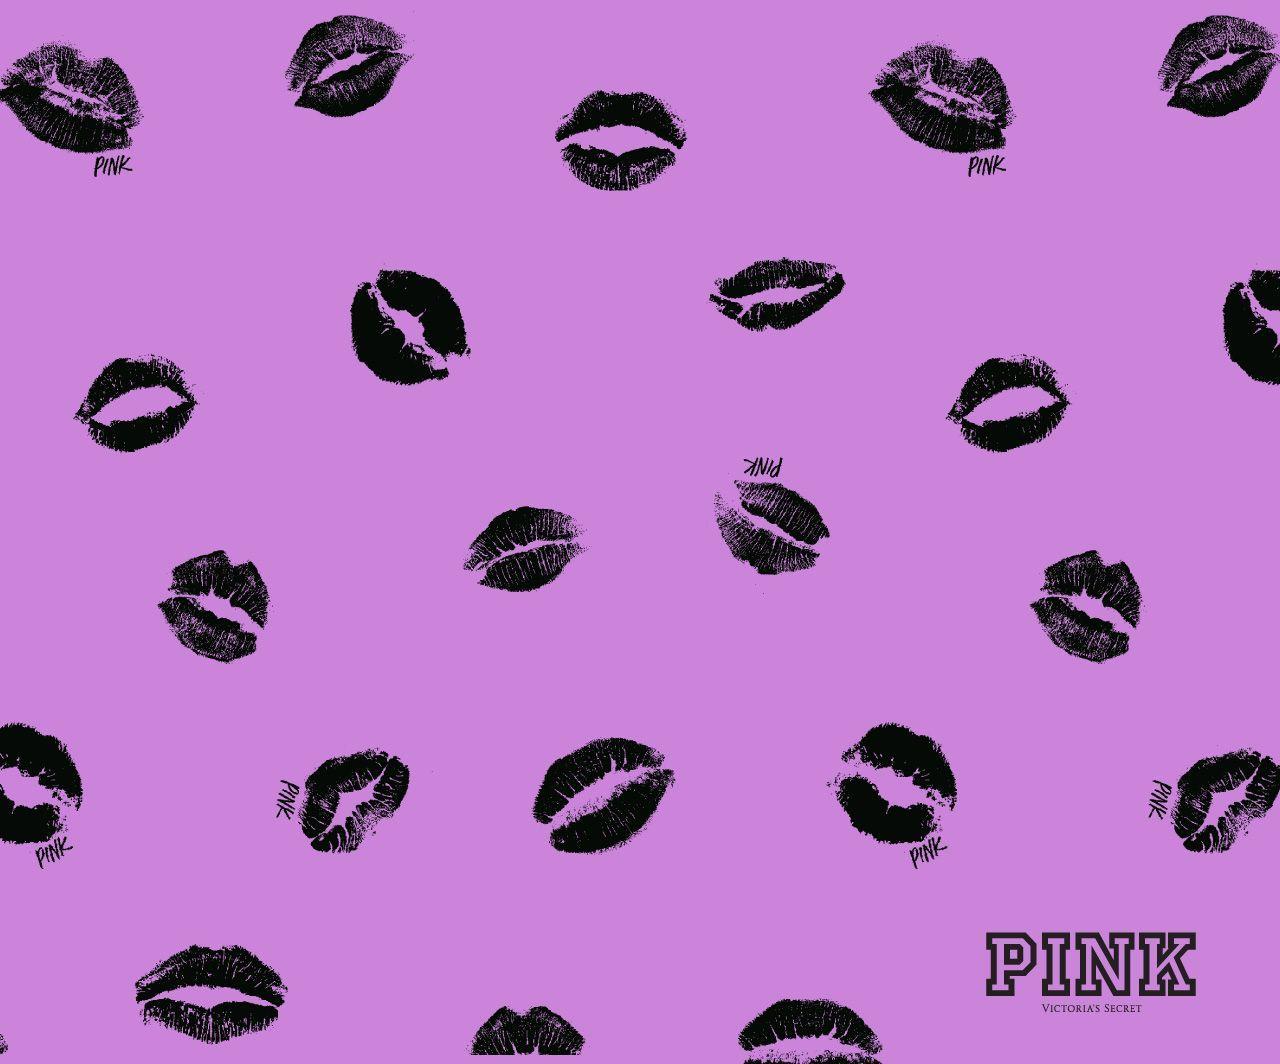 Download Victorias Secret Phone Wallpaper  Pink Victoria Secret Heart PNG  Image with No Background  PNGkeycom